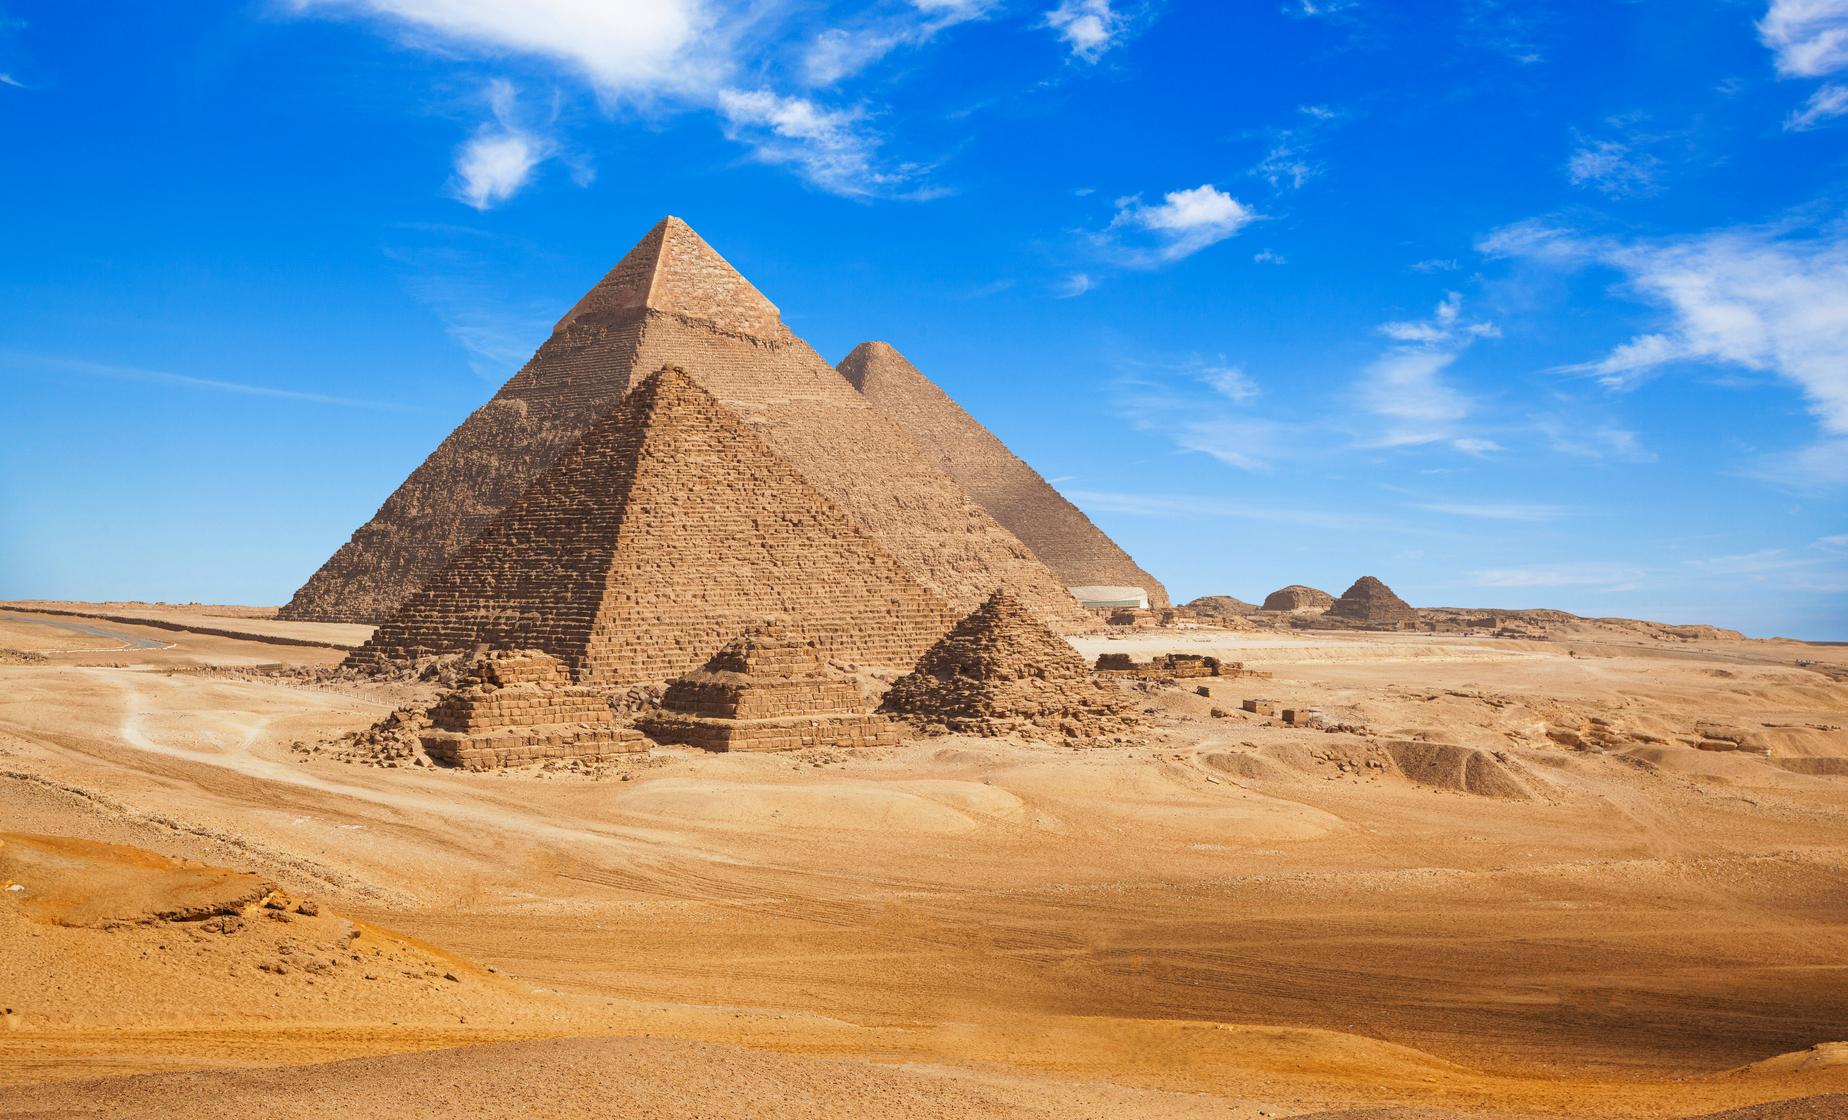 Private Classical Cairo Tour from Alexandria (Giza Plateau, Pyramids, Sphinx)